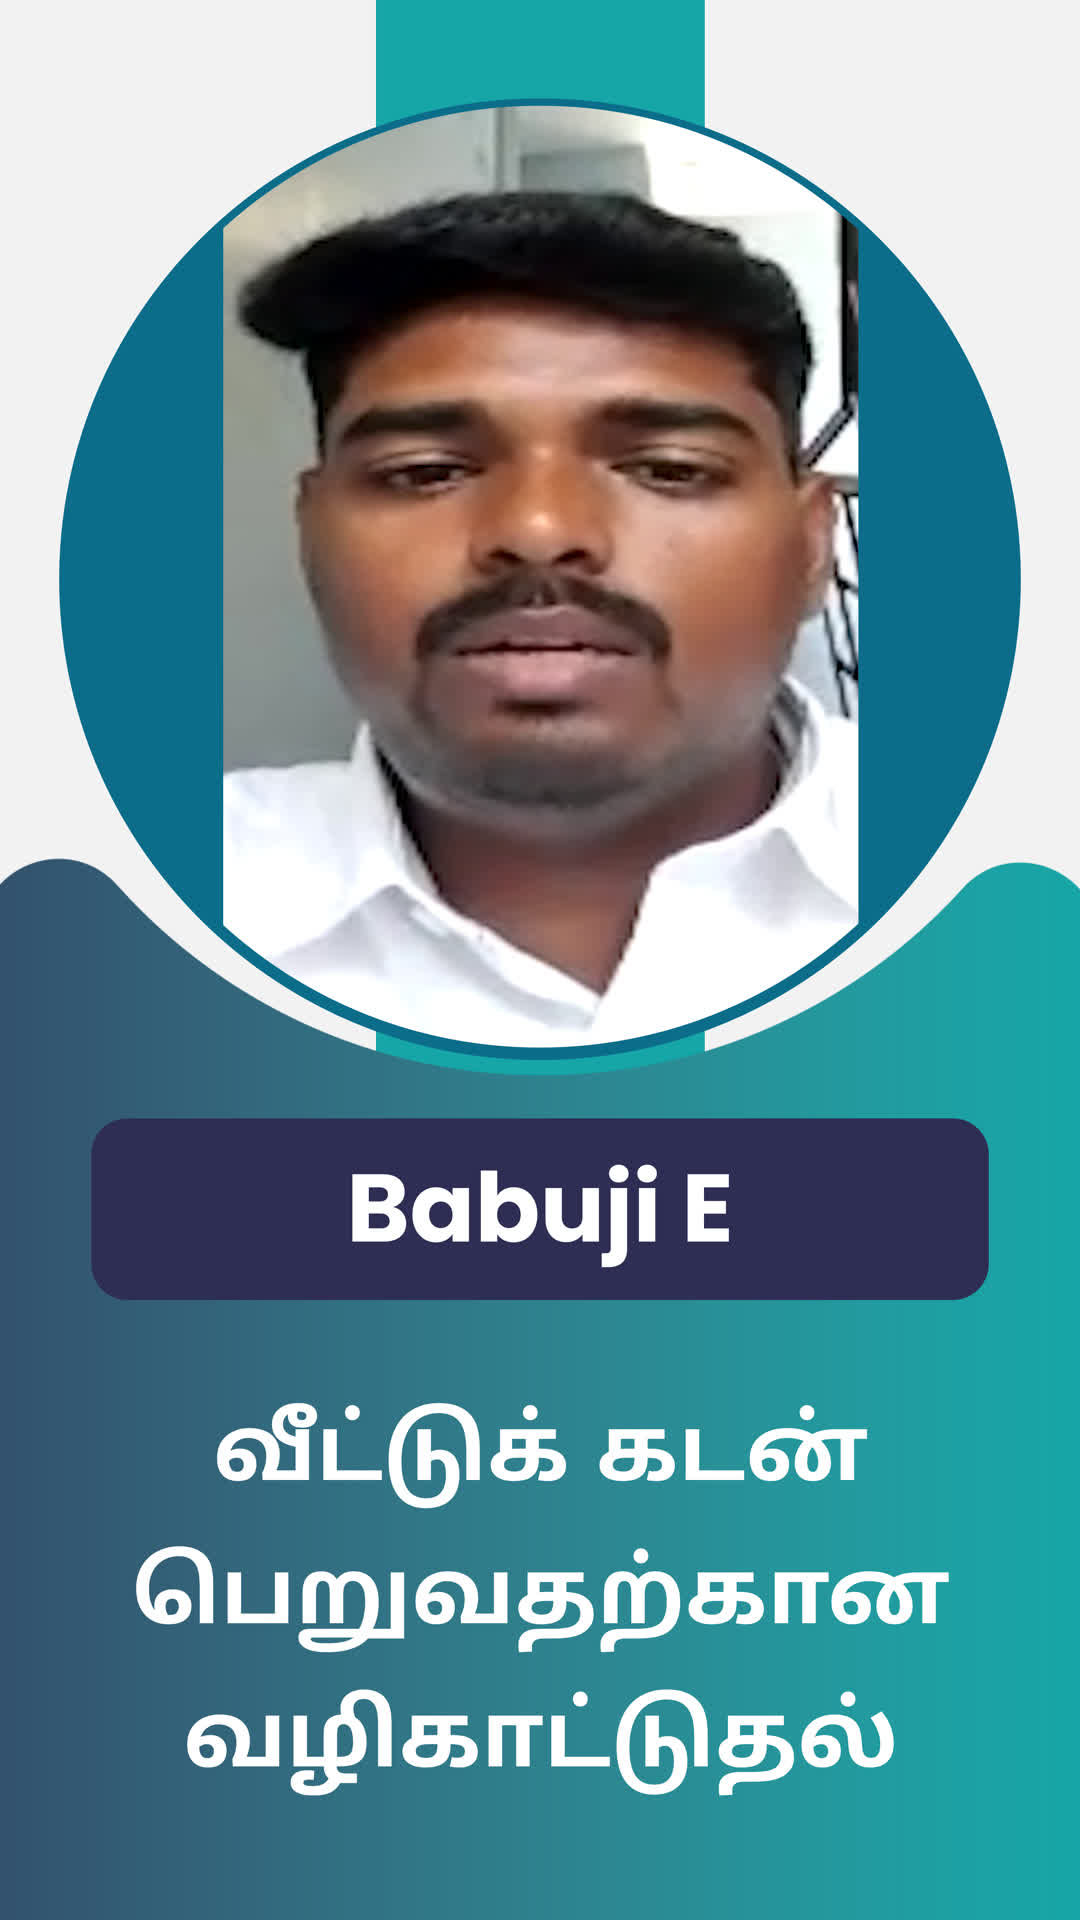 Babuji E's Honest Review of ffreedom app - Cuddalore ,Tamil Nadu